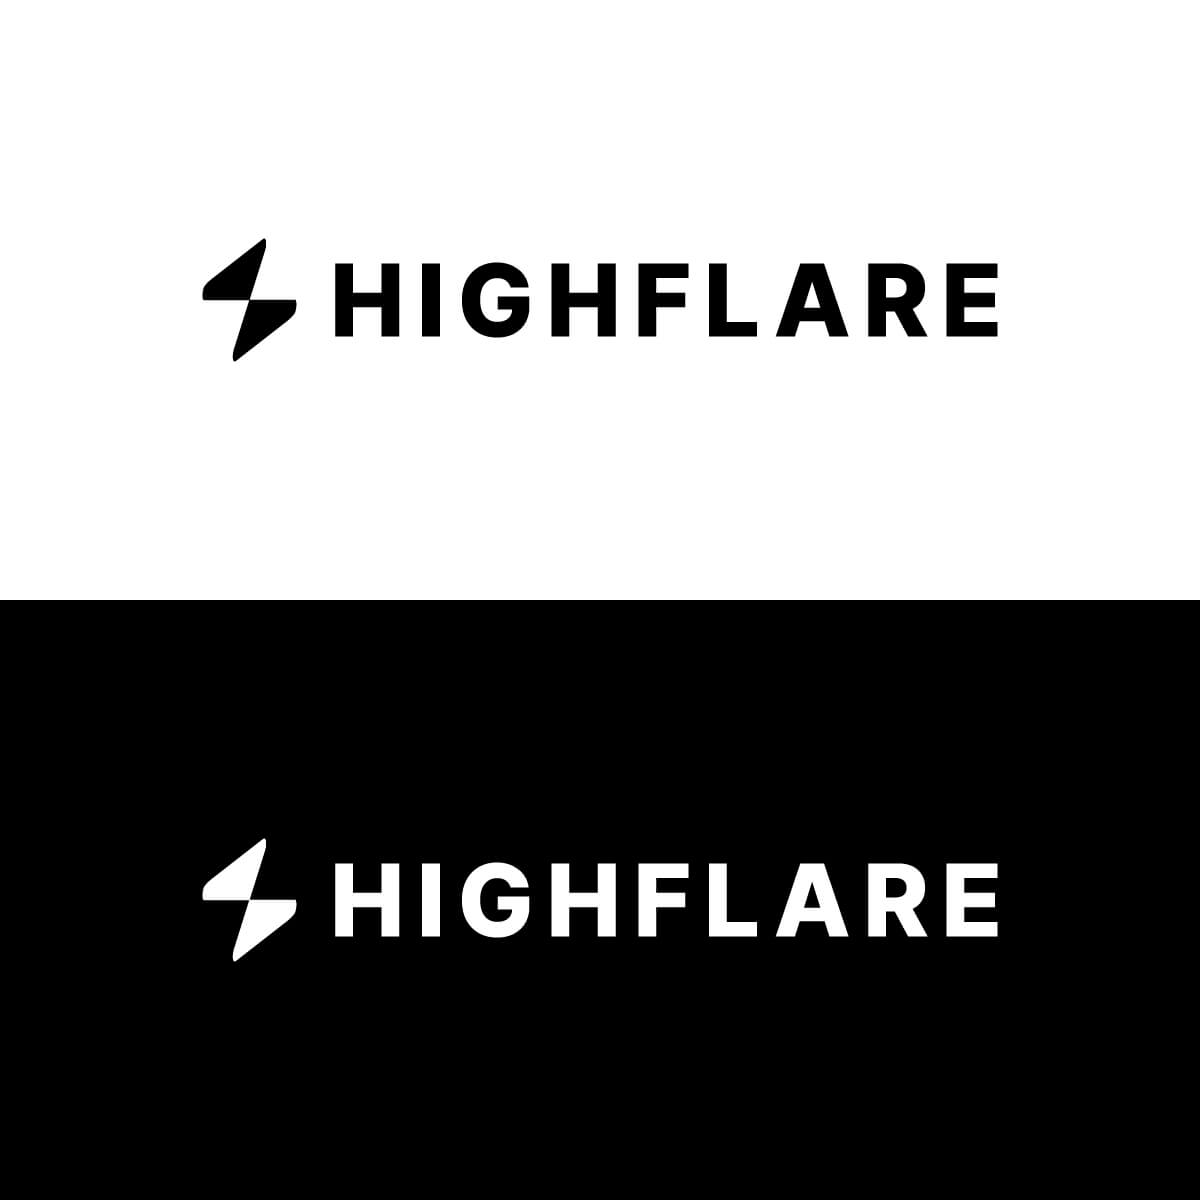 Highflare media kit logos